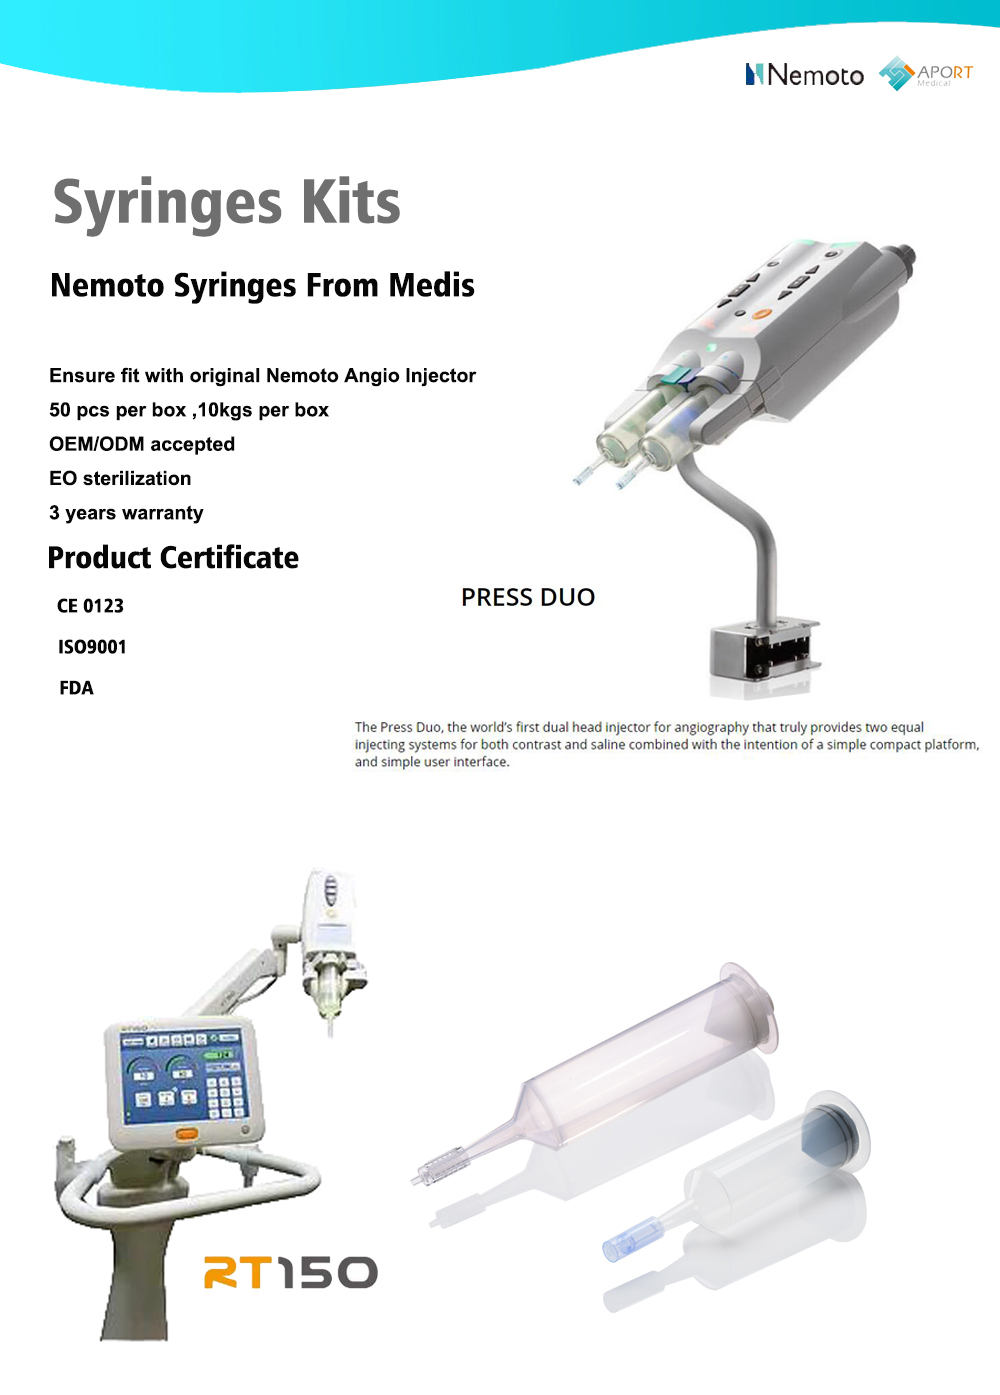 C855-5150 150 ml Nemoto Press Duo & Press Pro & Rempress Angio Contrast Power Injector Siringhe